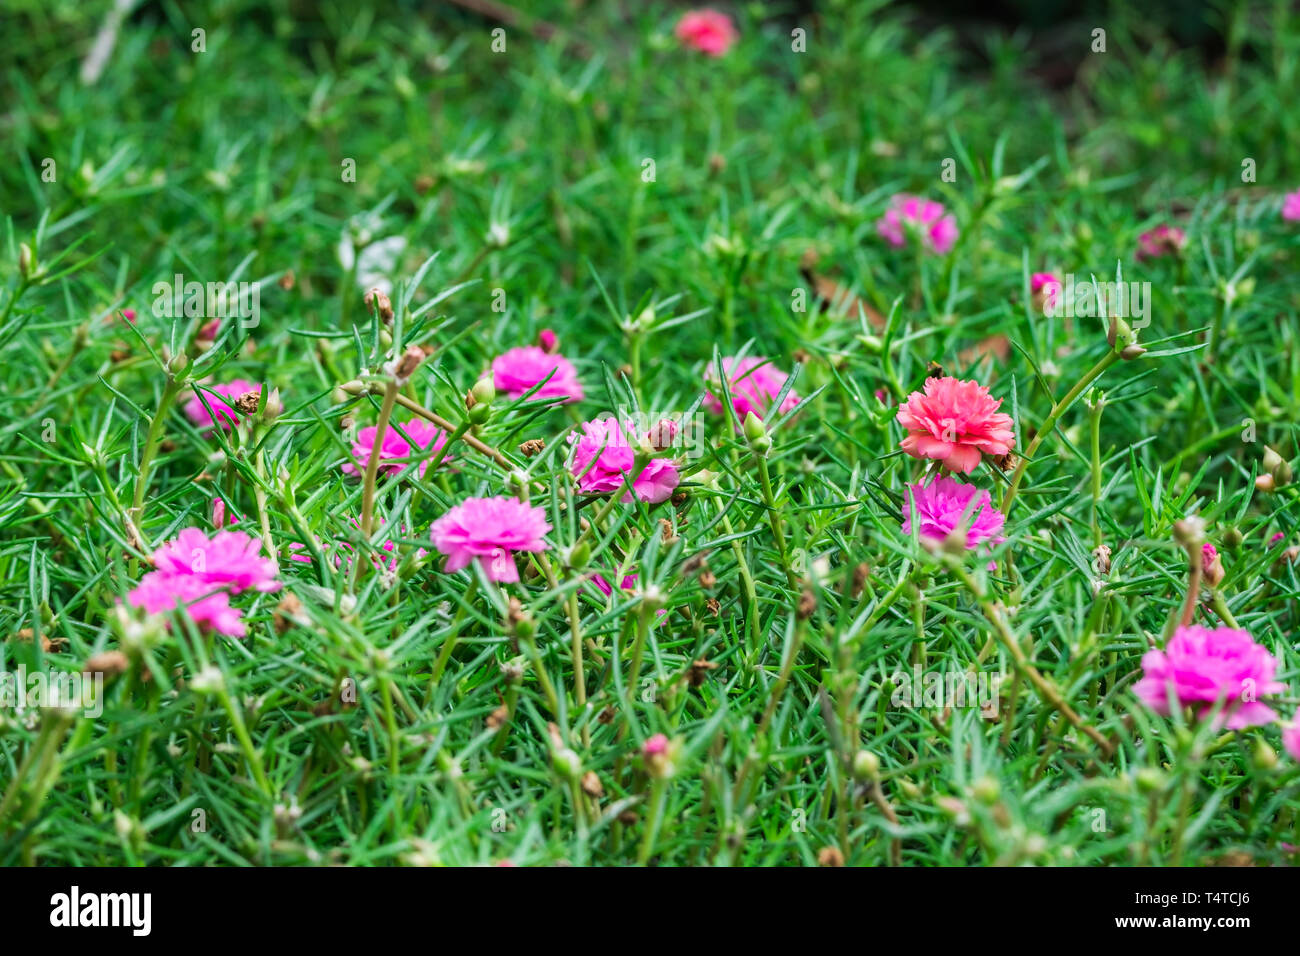 Common Purslane,Verdolaga,Pigweed Pusley,flower bloom pink green field in garden Stock Photo